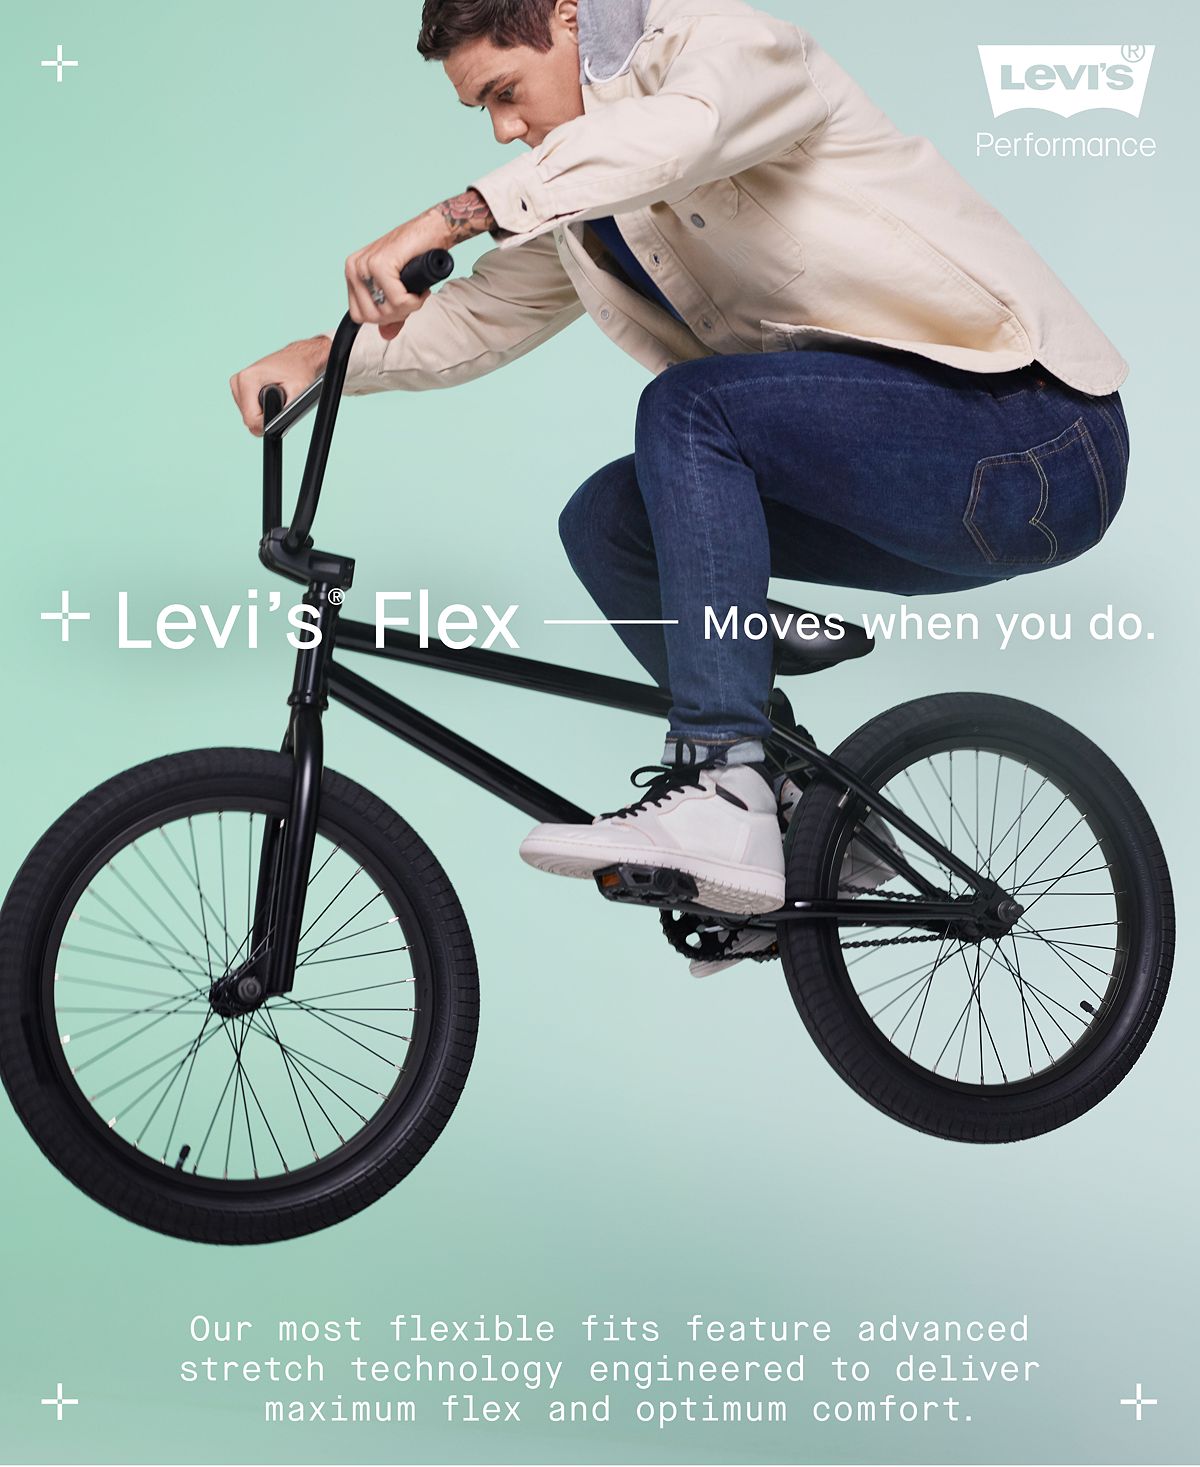 Levi's Levi’sflex Men’s 511™ Slim Fit Jeans Headed East - Waterless